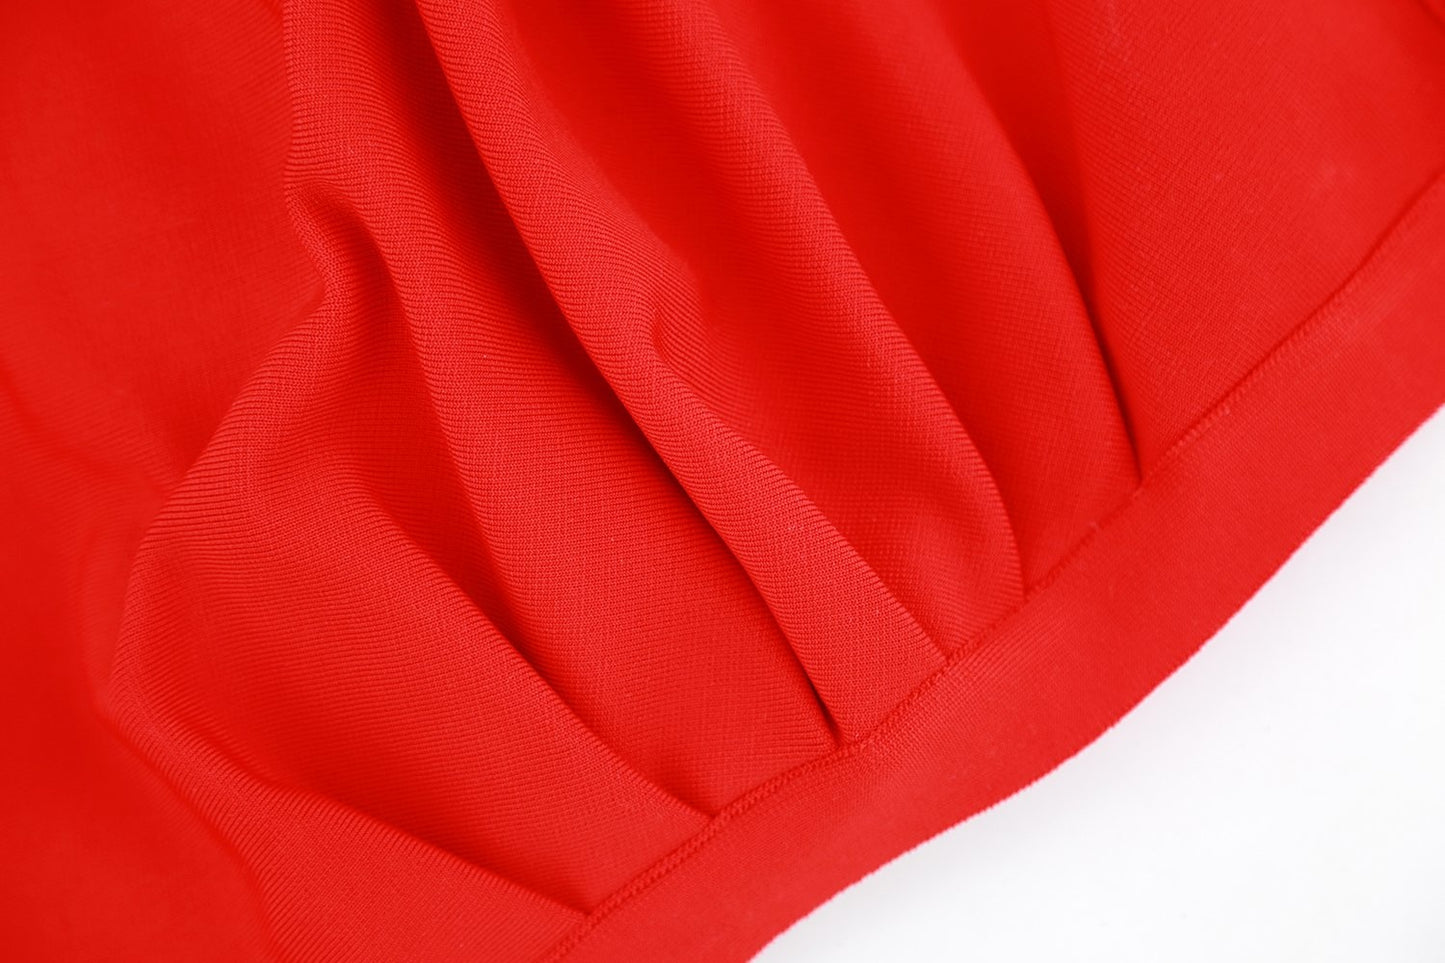 Winnal Celebrity Party Bandage Dress Women Red Sleeveless One-Shoulder Sexy Split Maxi Long Vestidos